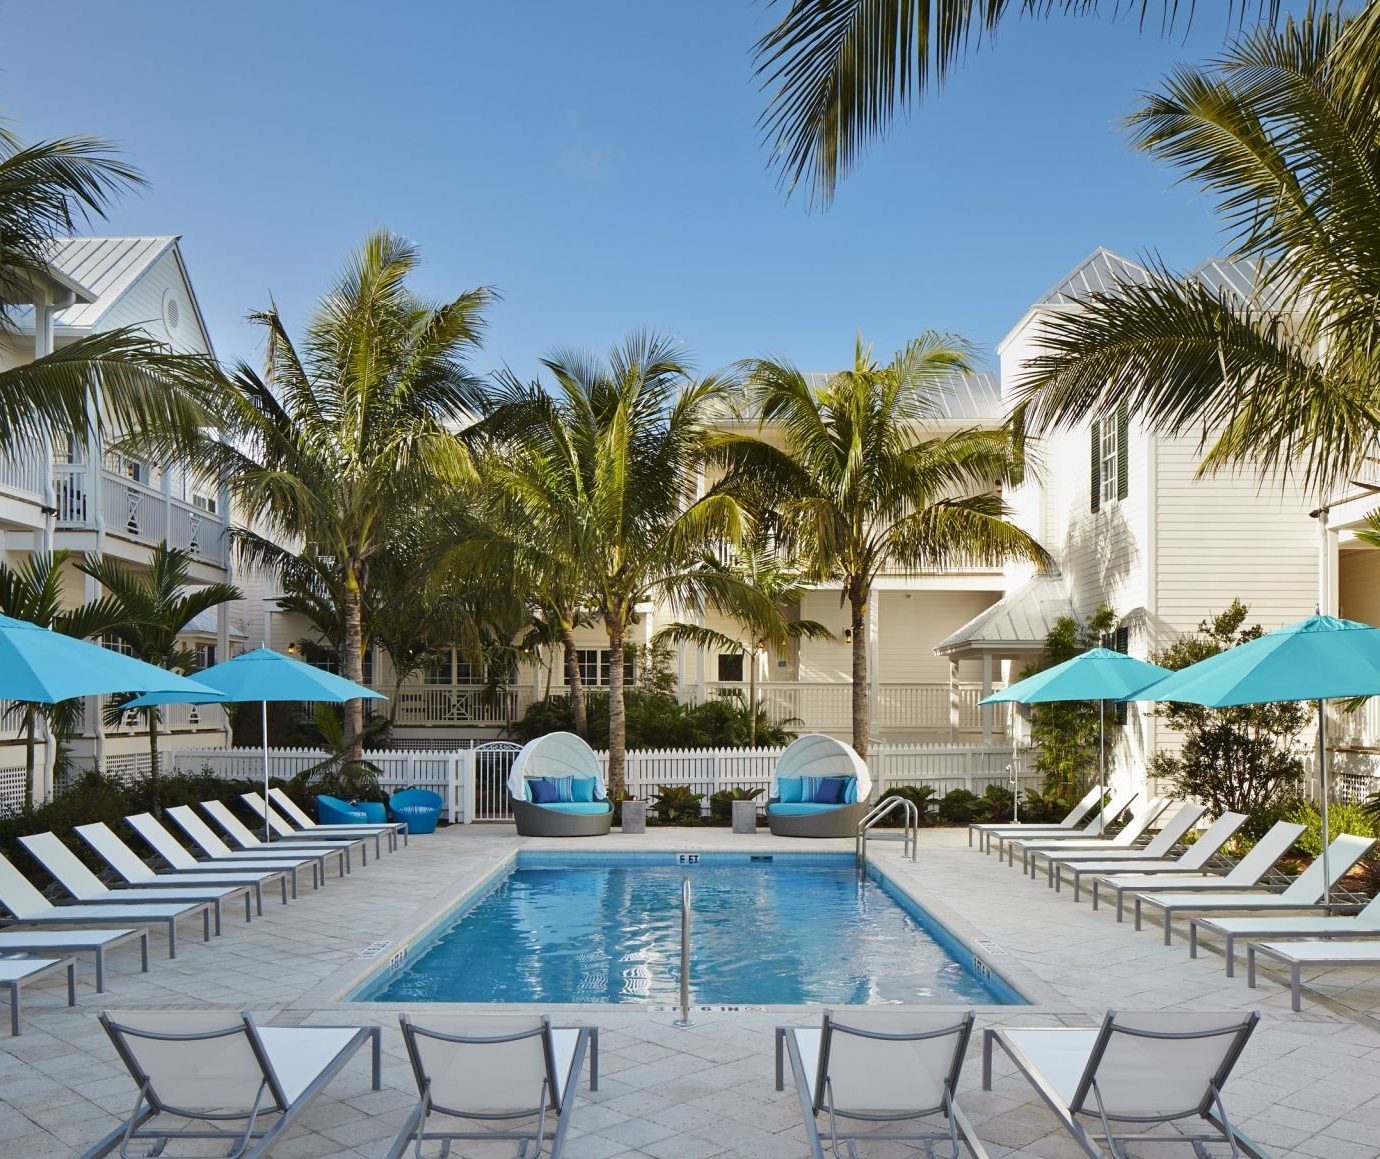 Florida Hotels Resort swimming pool property leisure vacation resort town palm tree hotel estate arecales real estate caribbean Villa tourism tropics hacienda